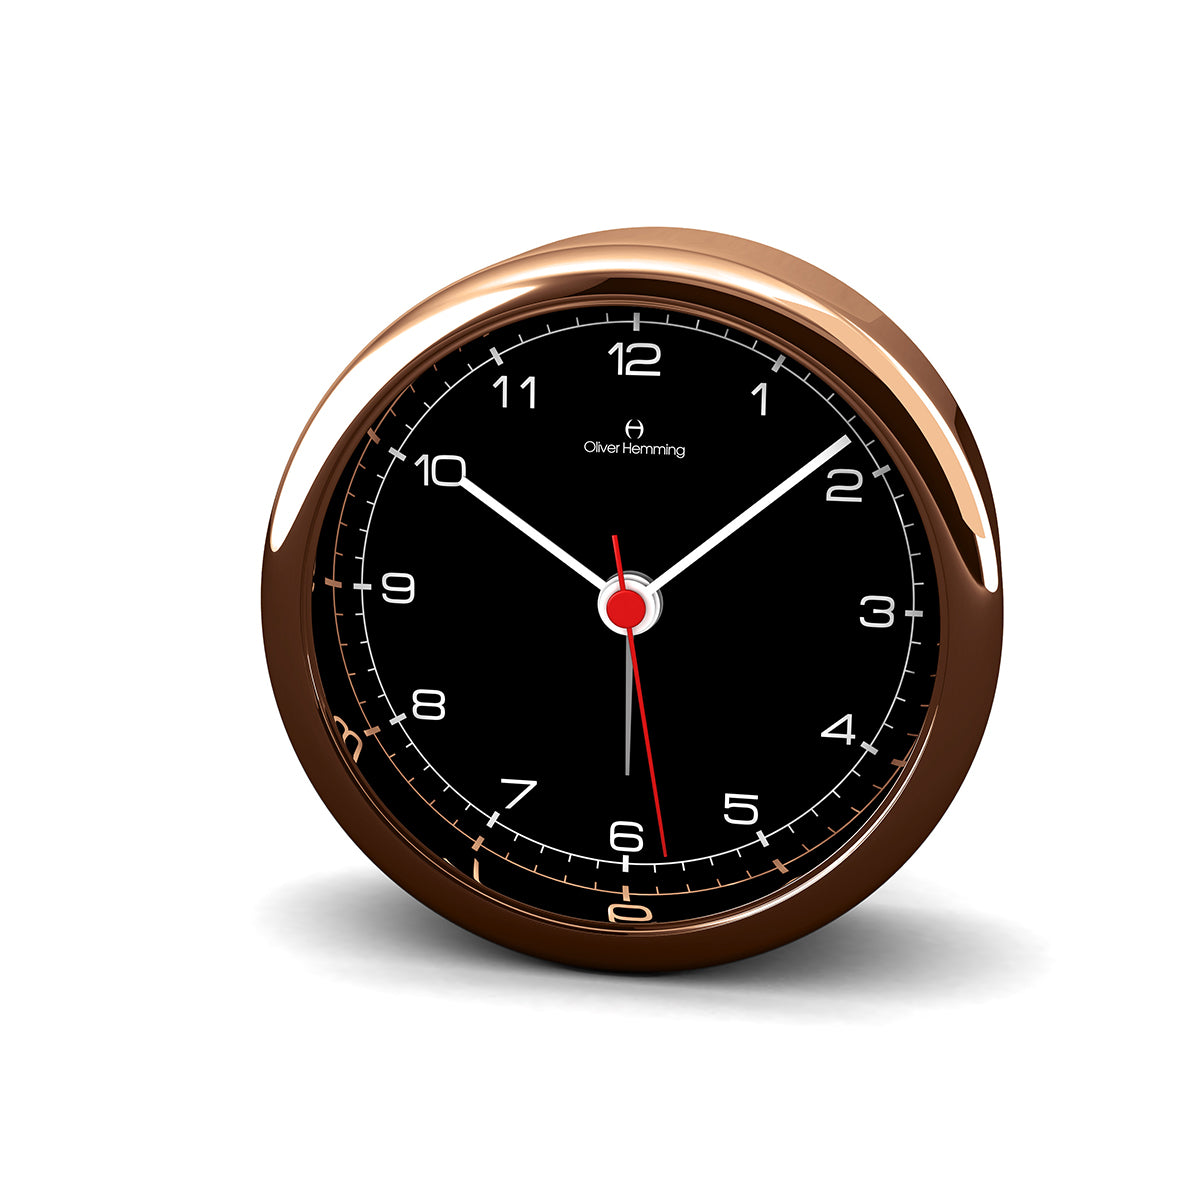 Coffee Gold Desire Alarm Clock - HX80C5B